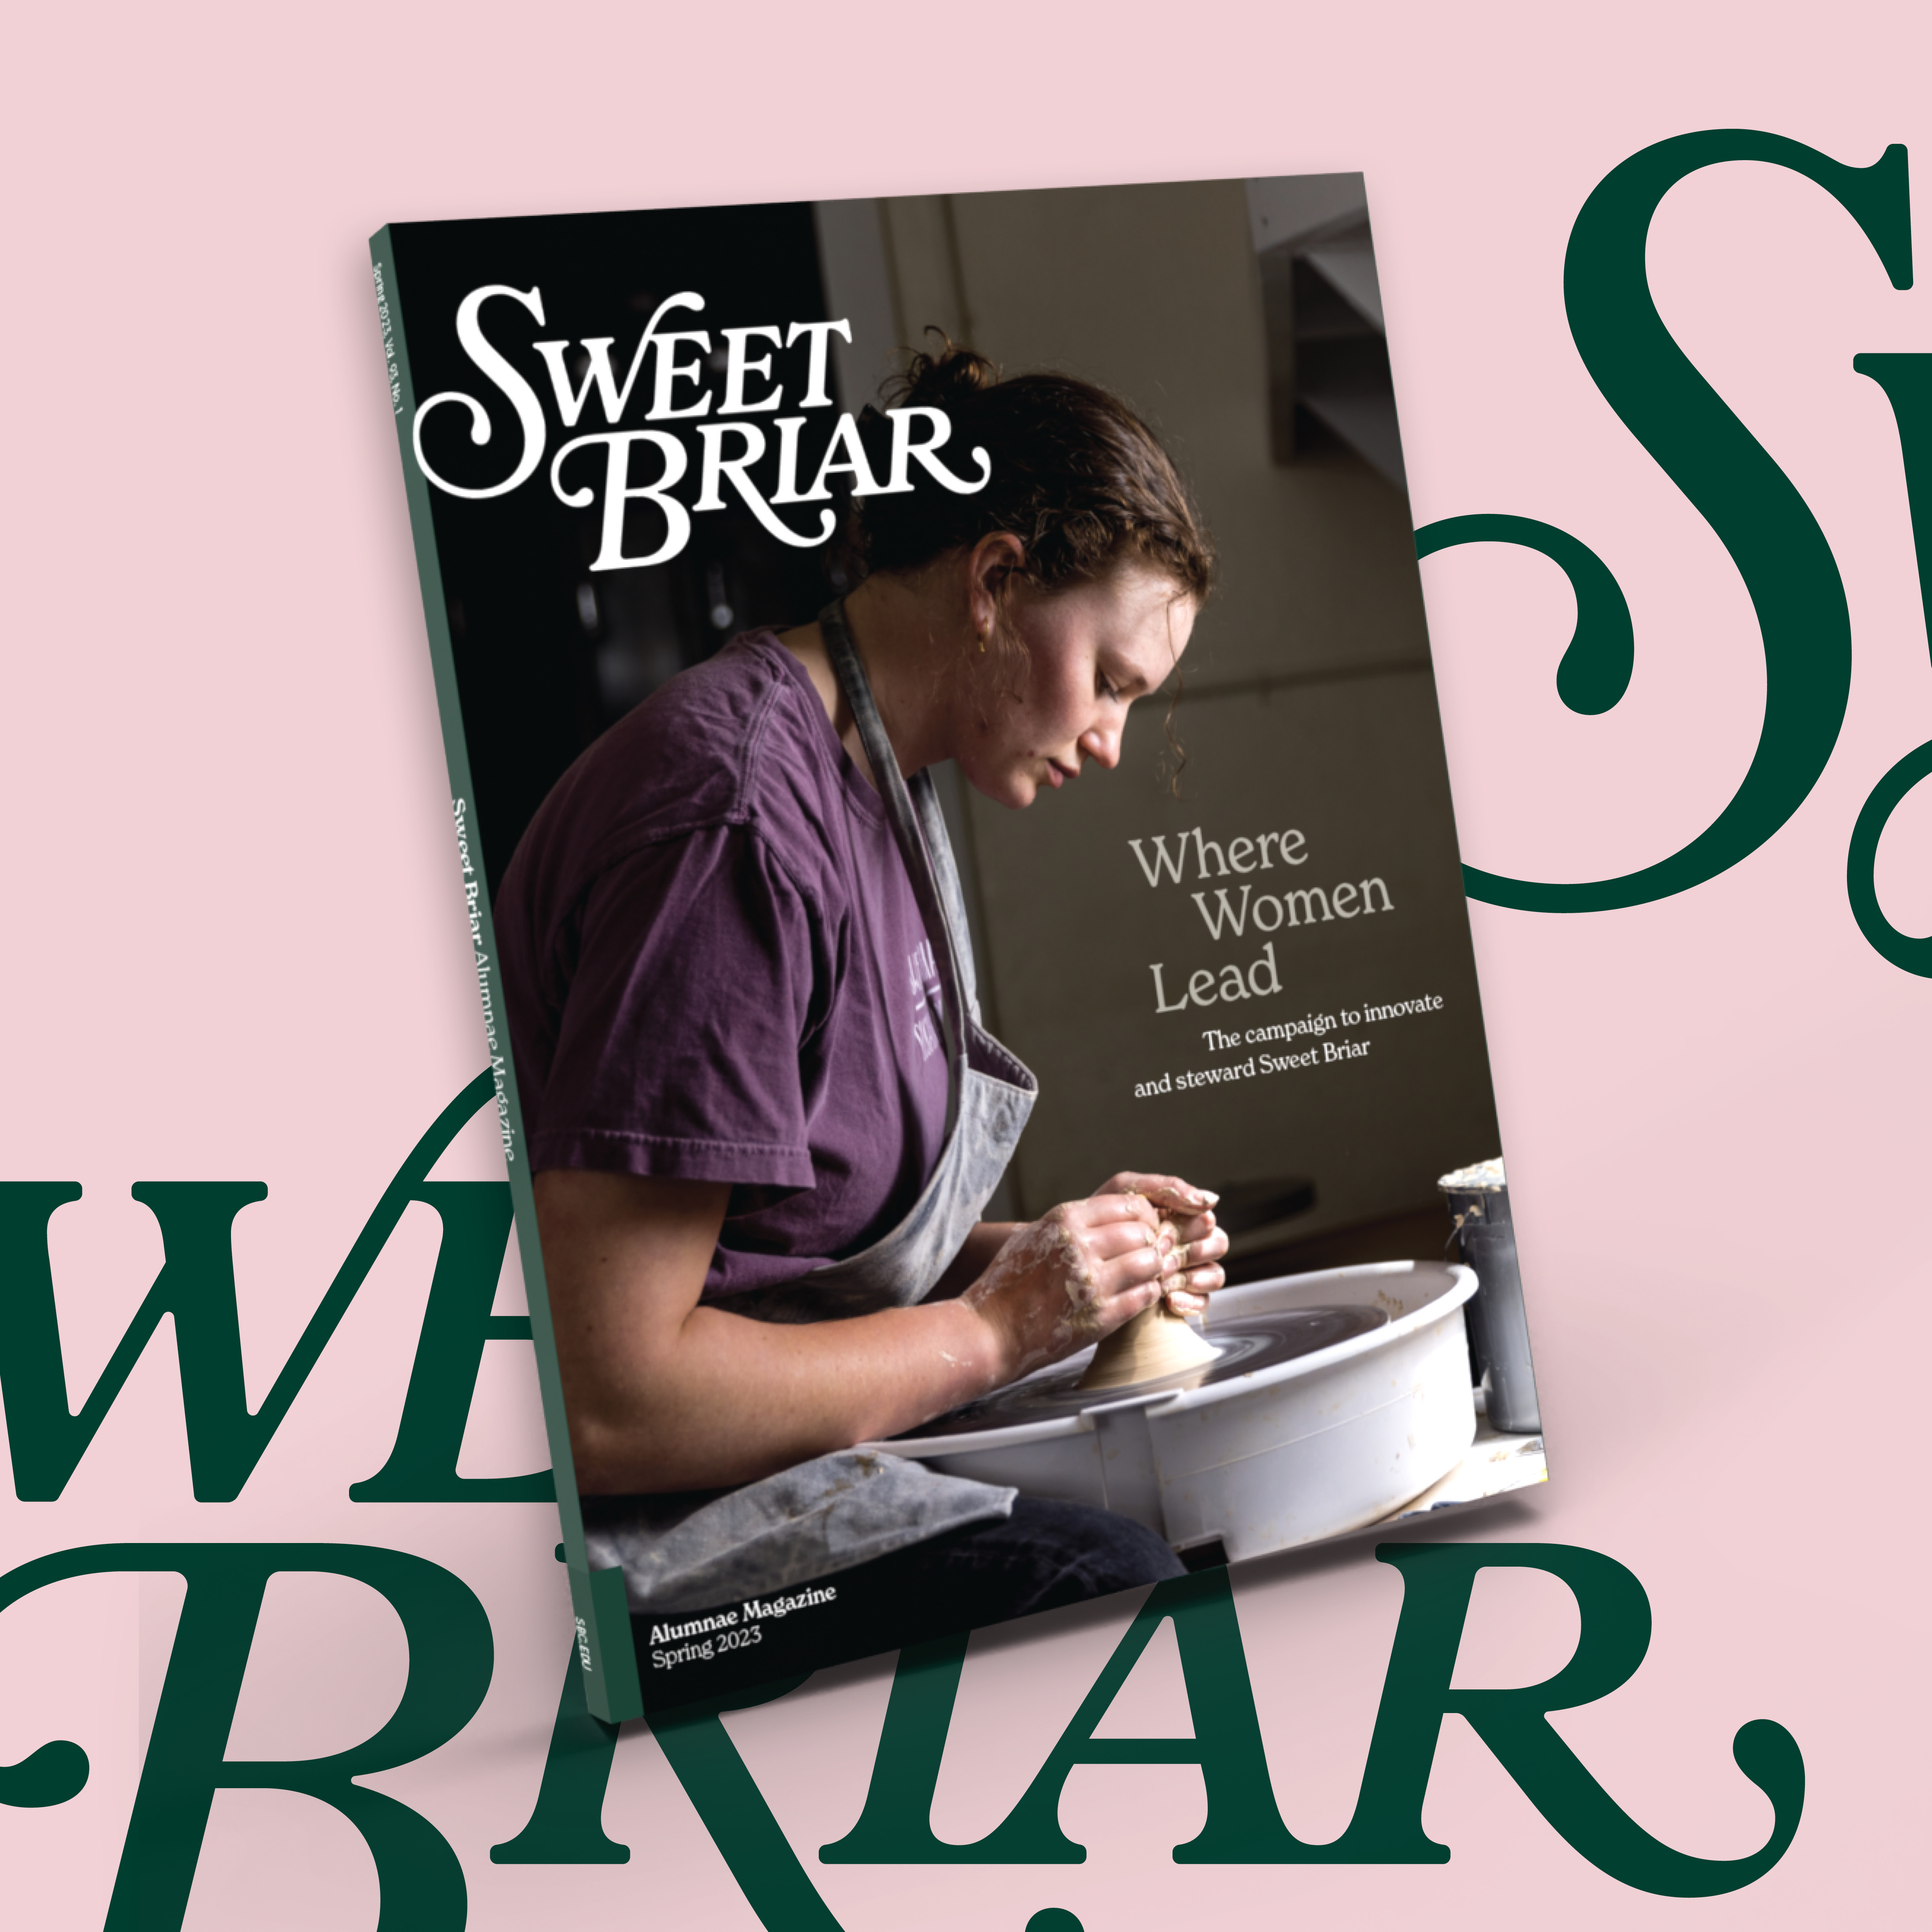 Sweet Briar Magazine